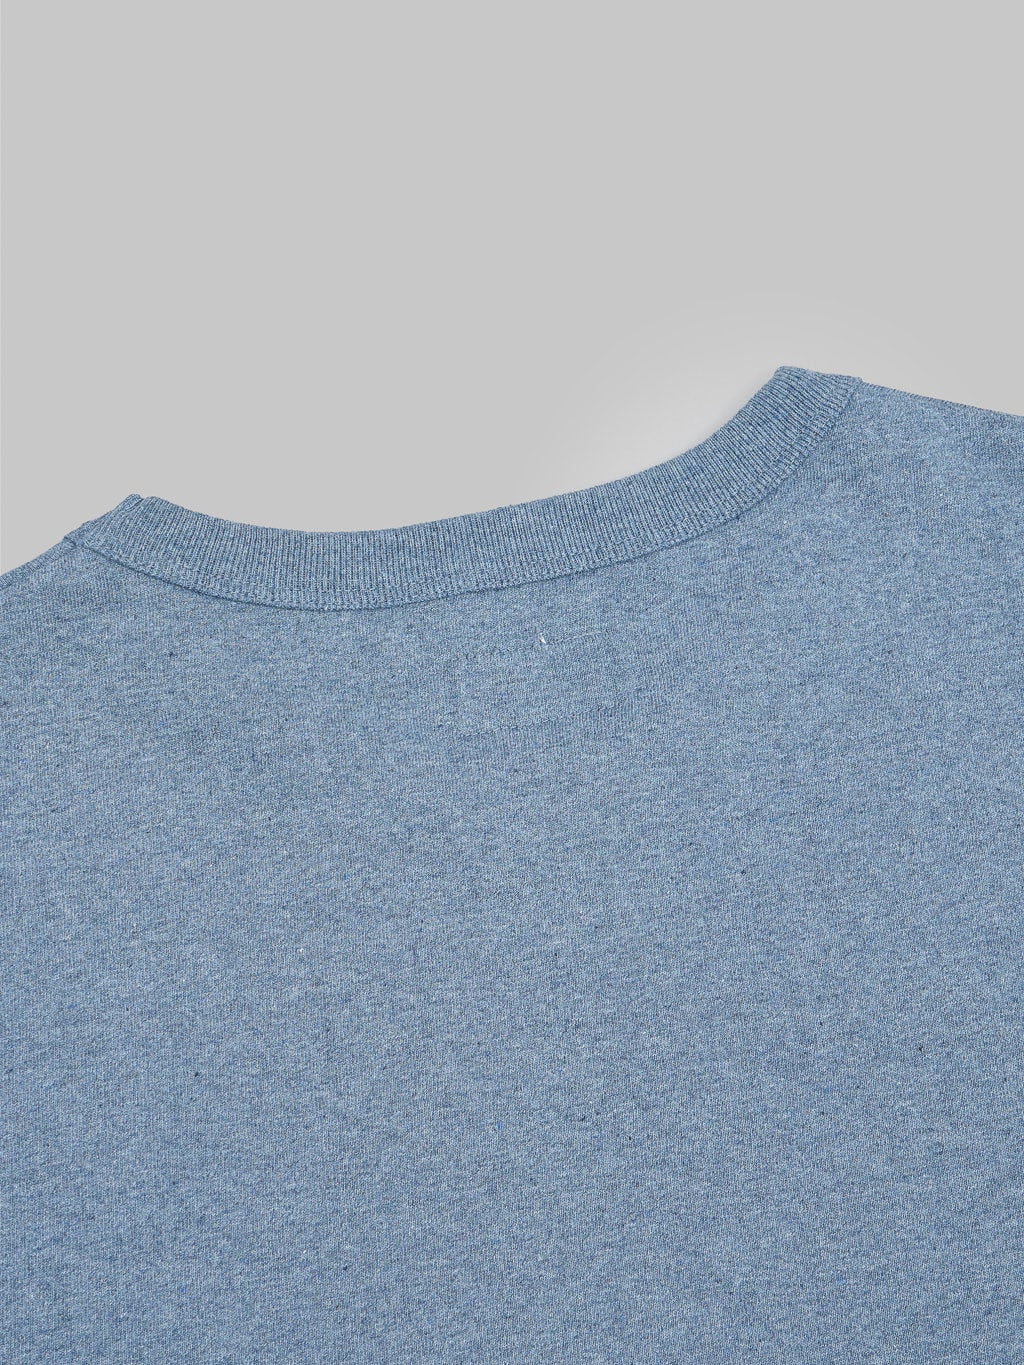 Japan Blue Recycled Denim Tshirt mid Indigo back collar